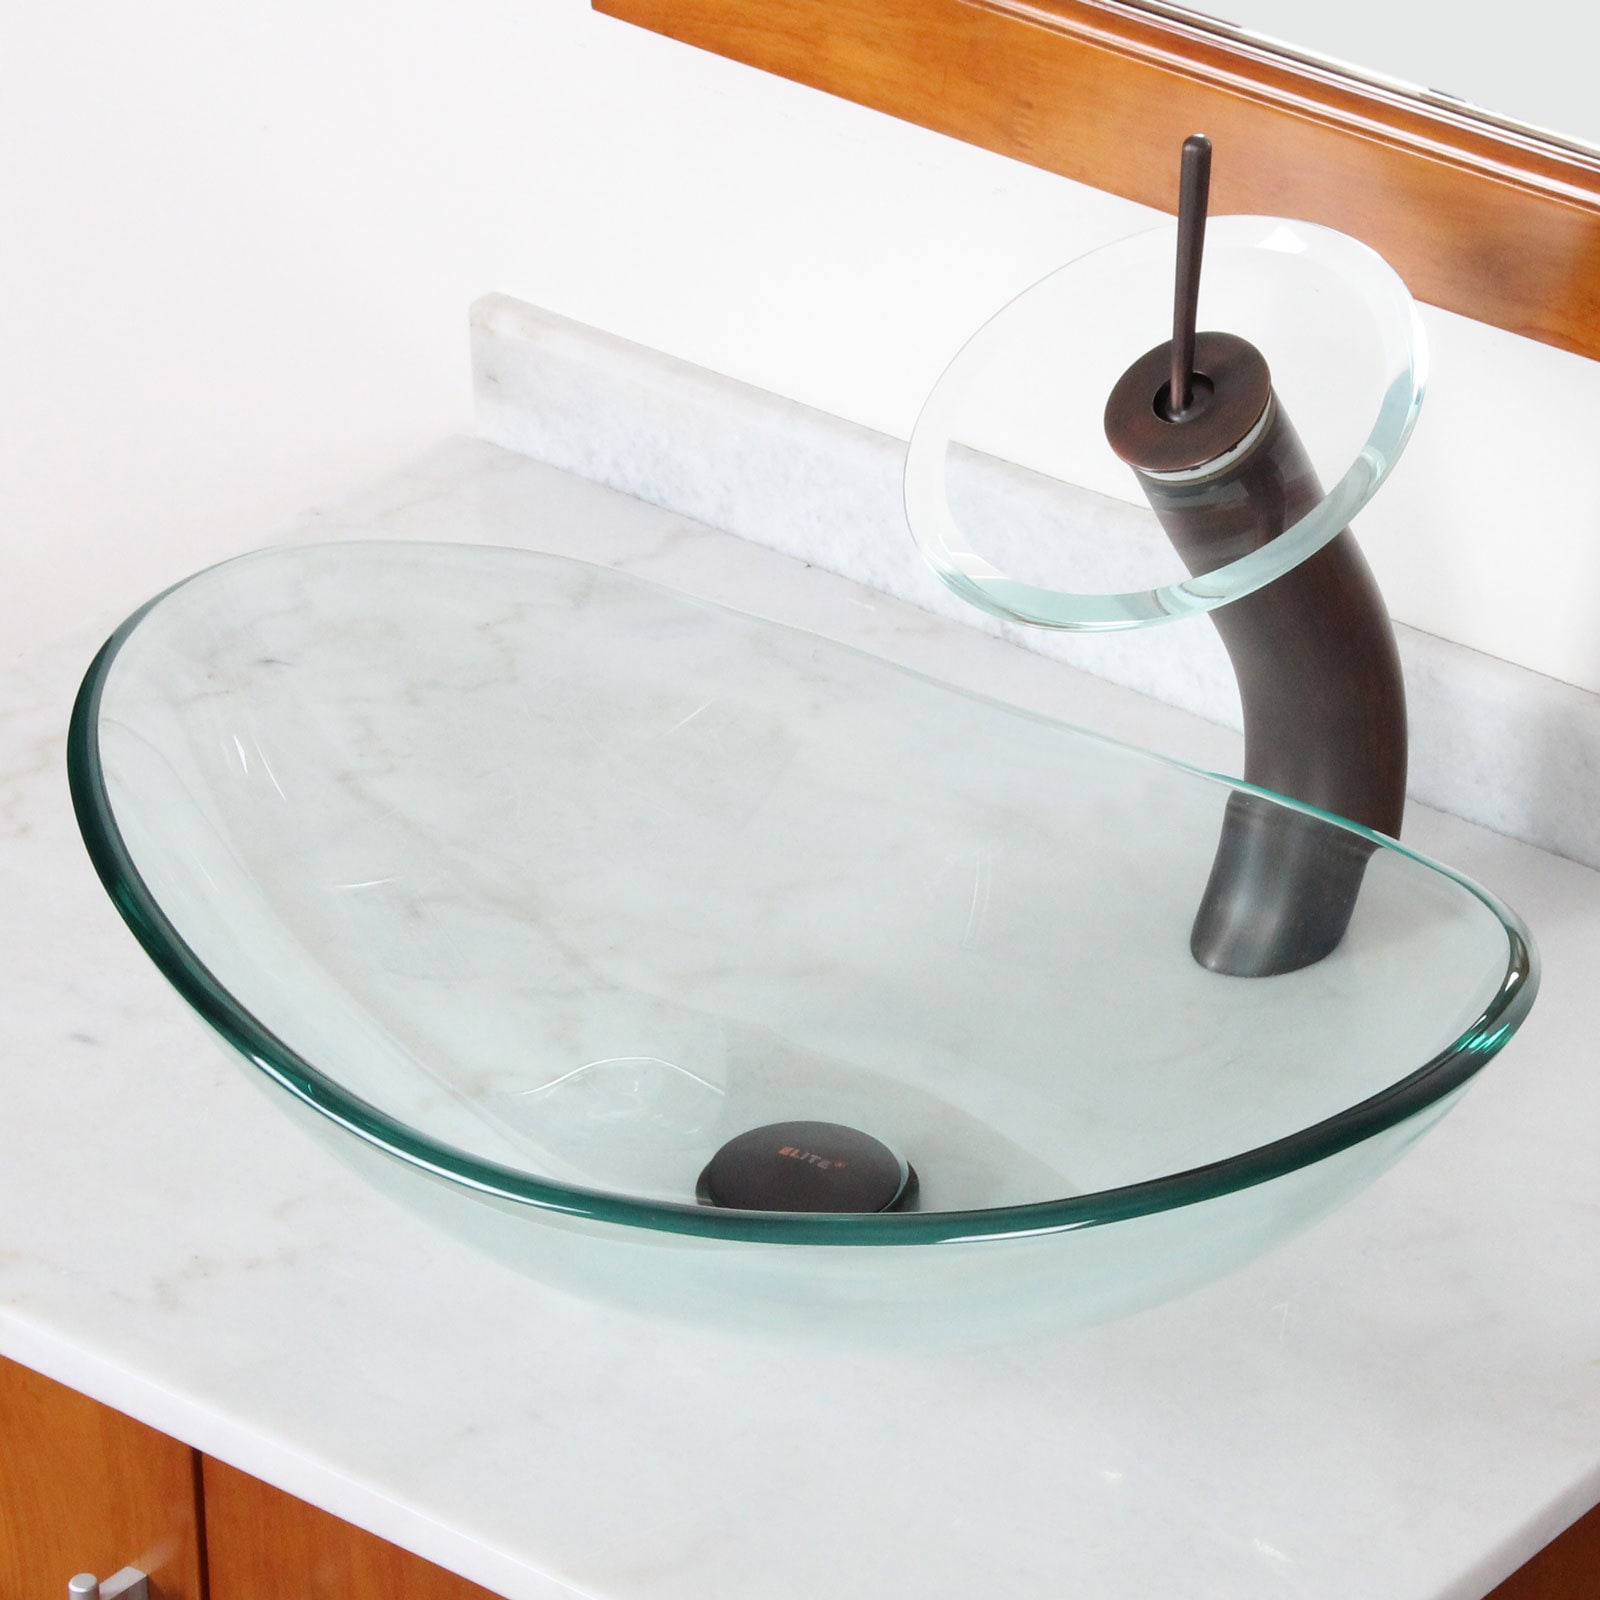 RE Oval Tempered Glass Bathroom Basin Vessel Sink Chrome Mixer Brass Faucet Set 